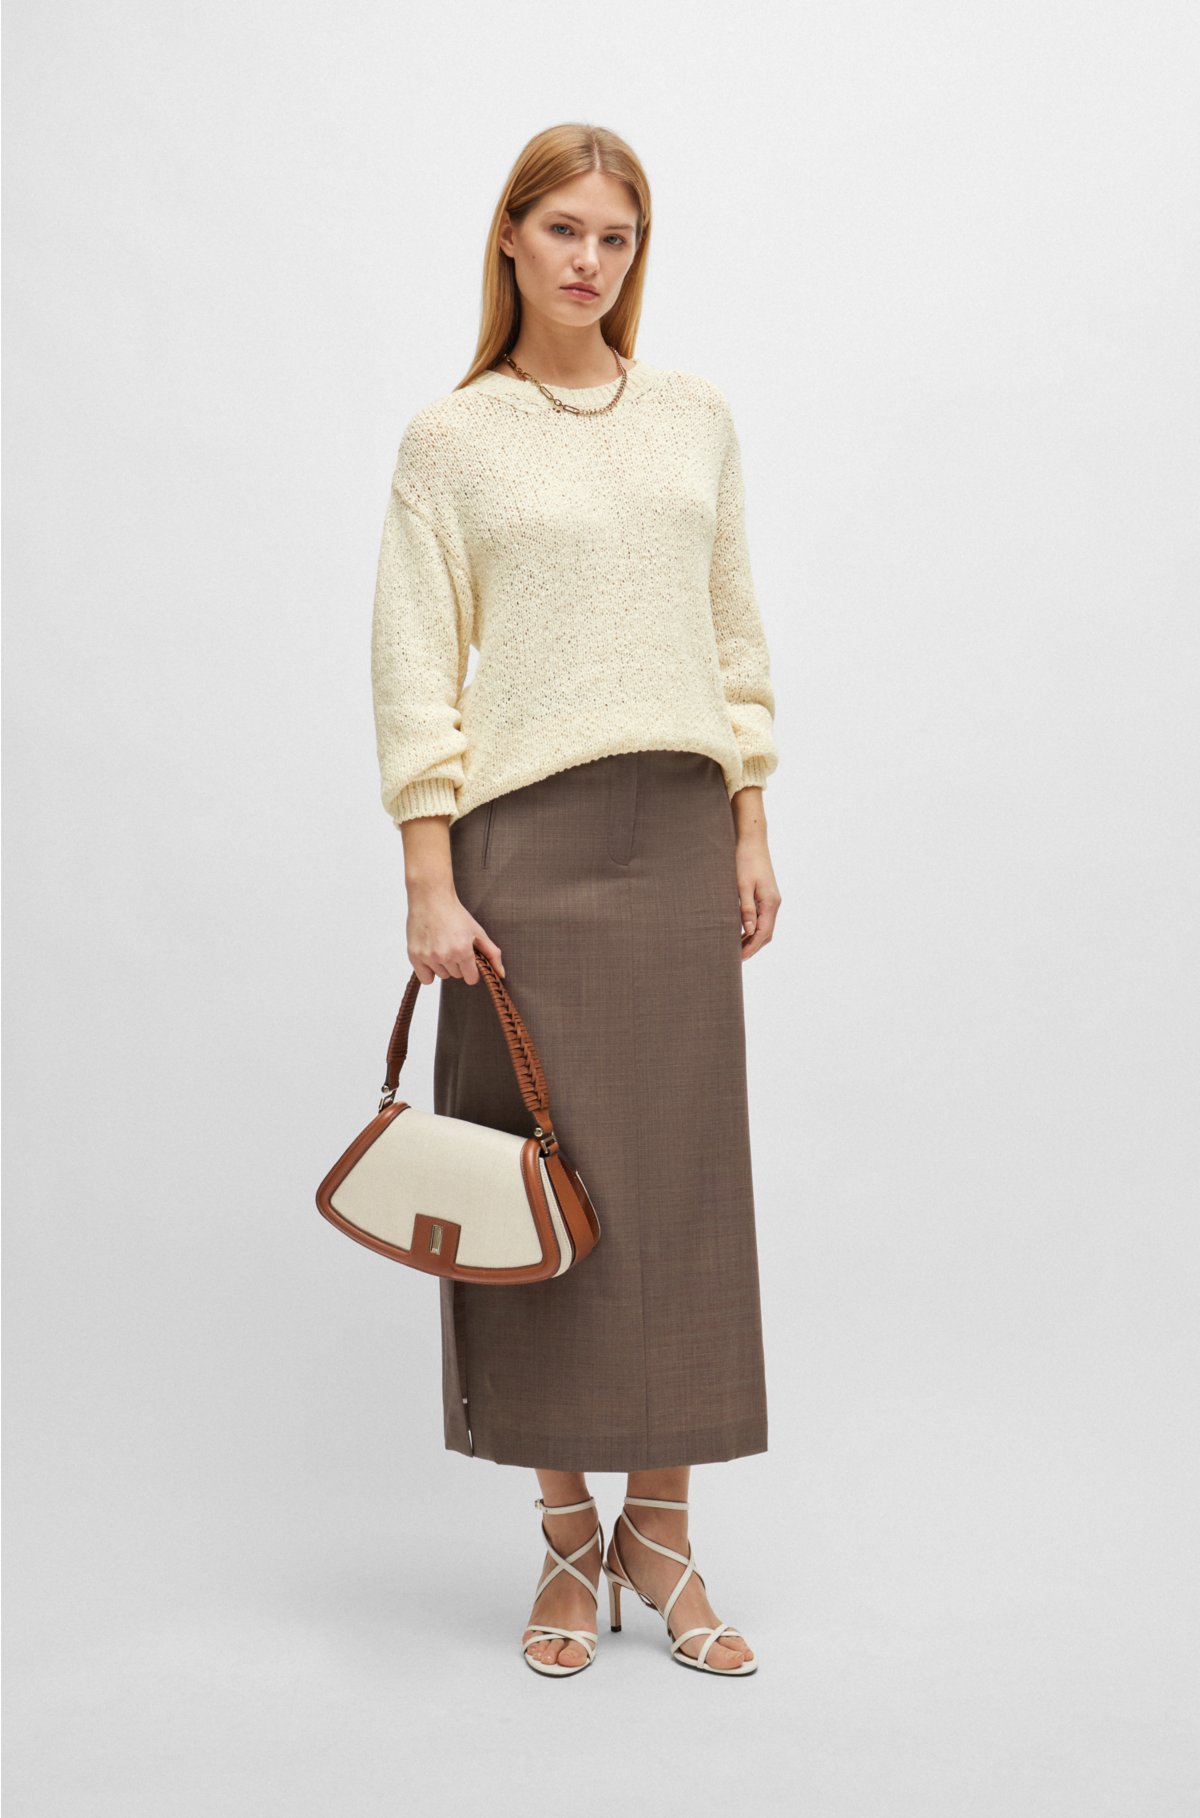 Cotton-blend shoulder bag with leather trims, Beige